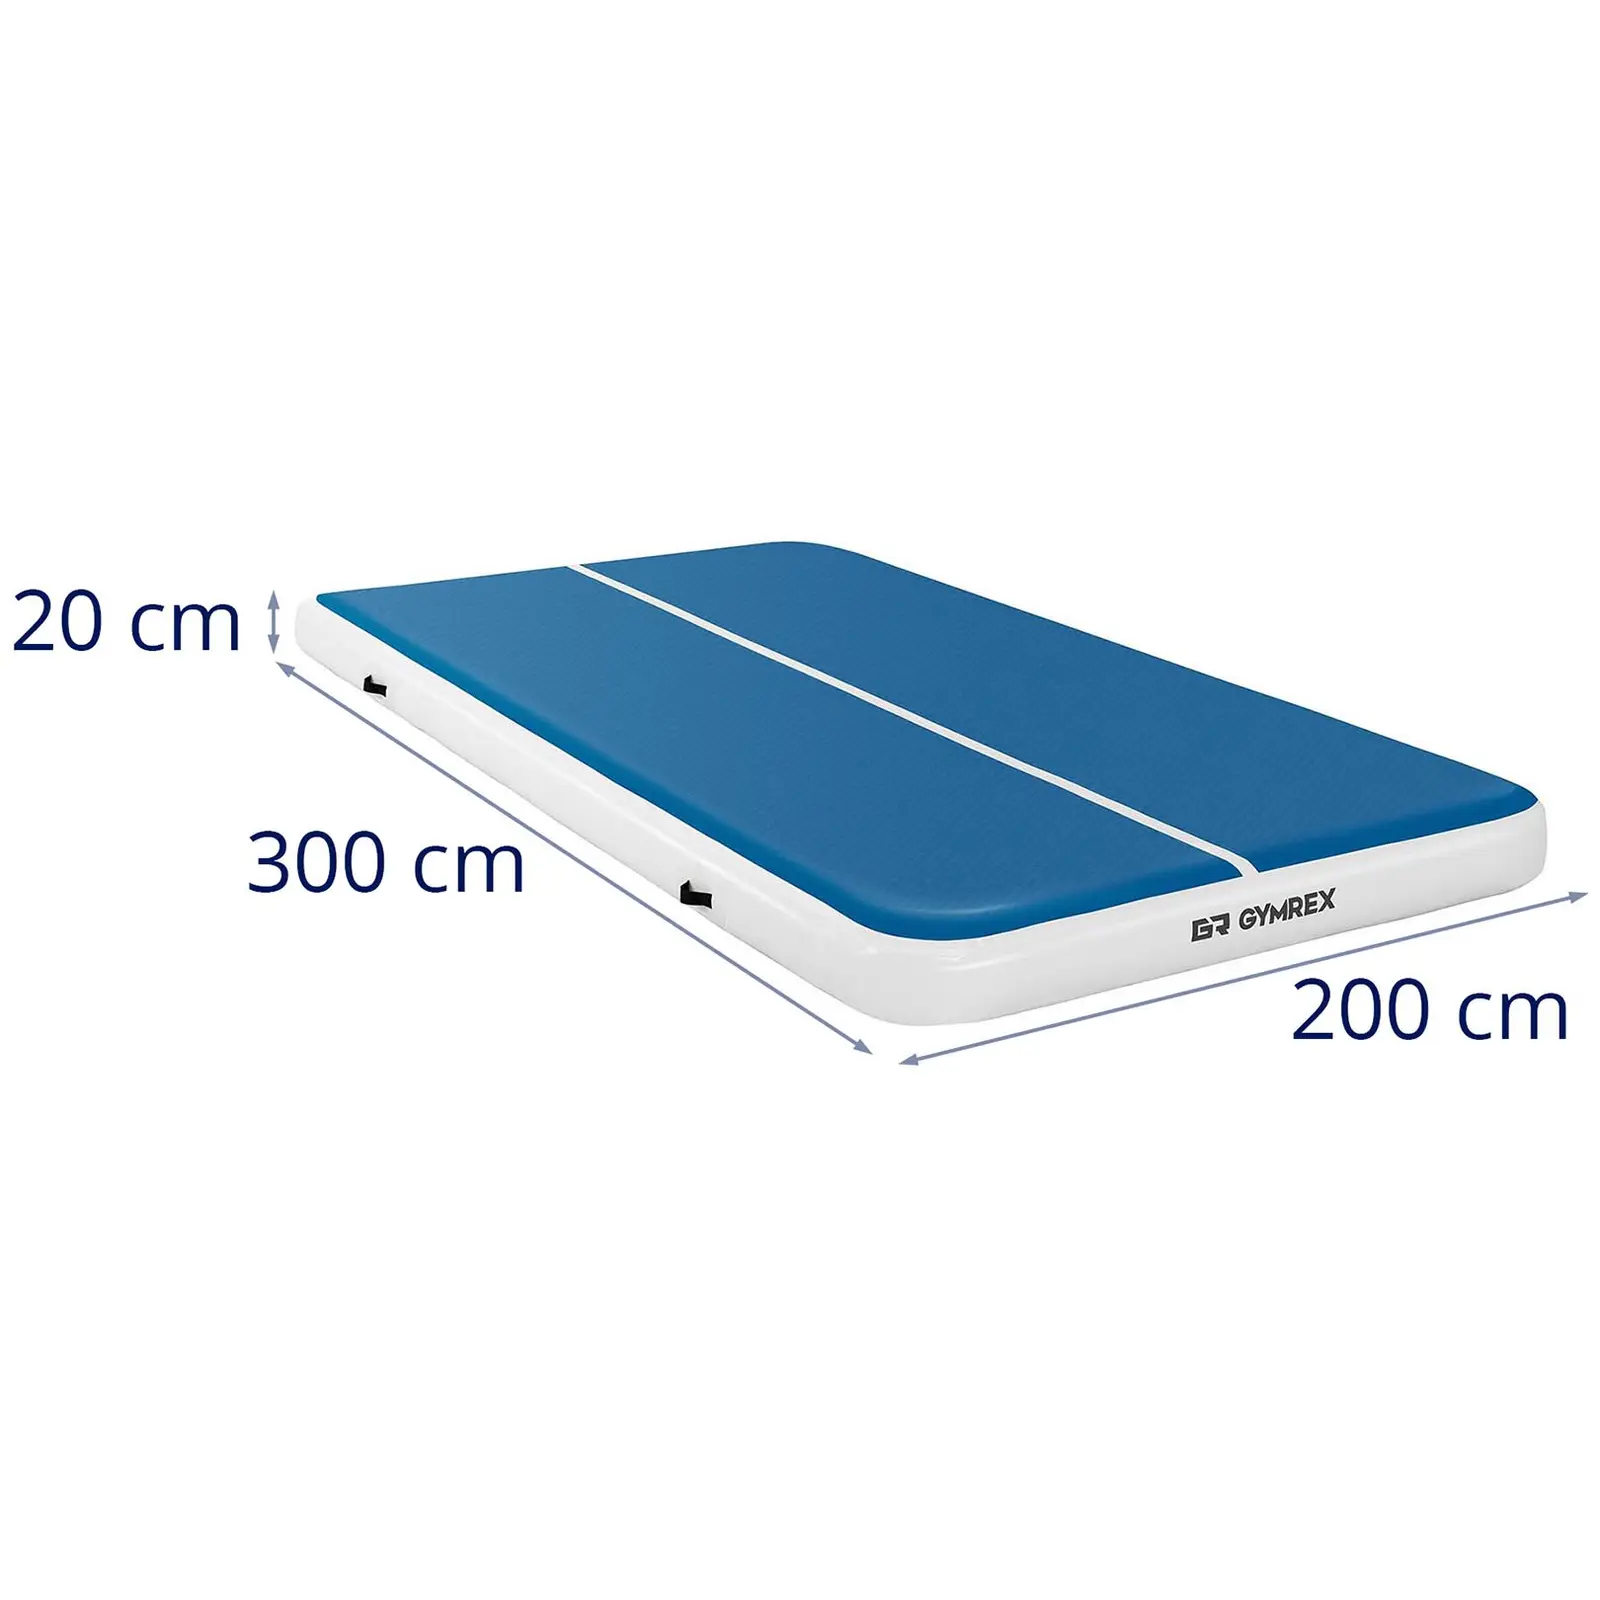 Uppblåsbar gymnastikmatta - 300 x 200 x 20 cm - blå och vit